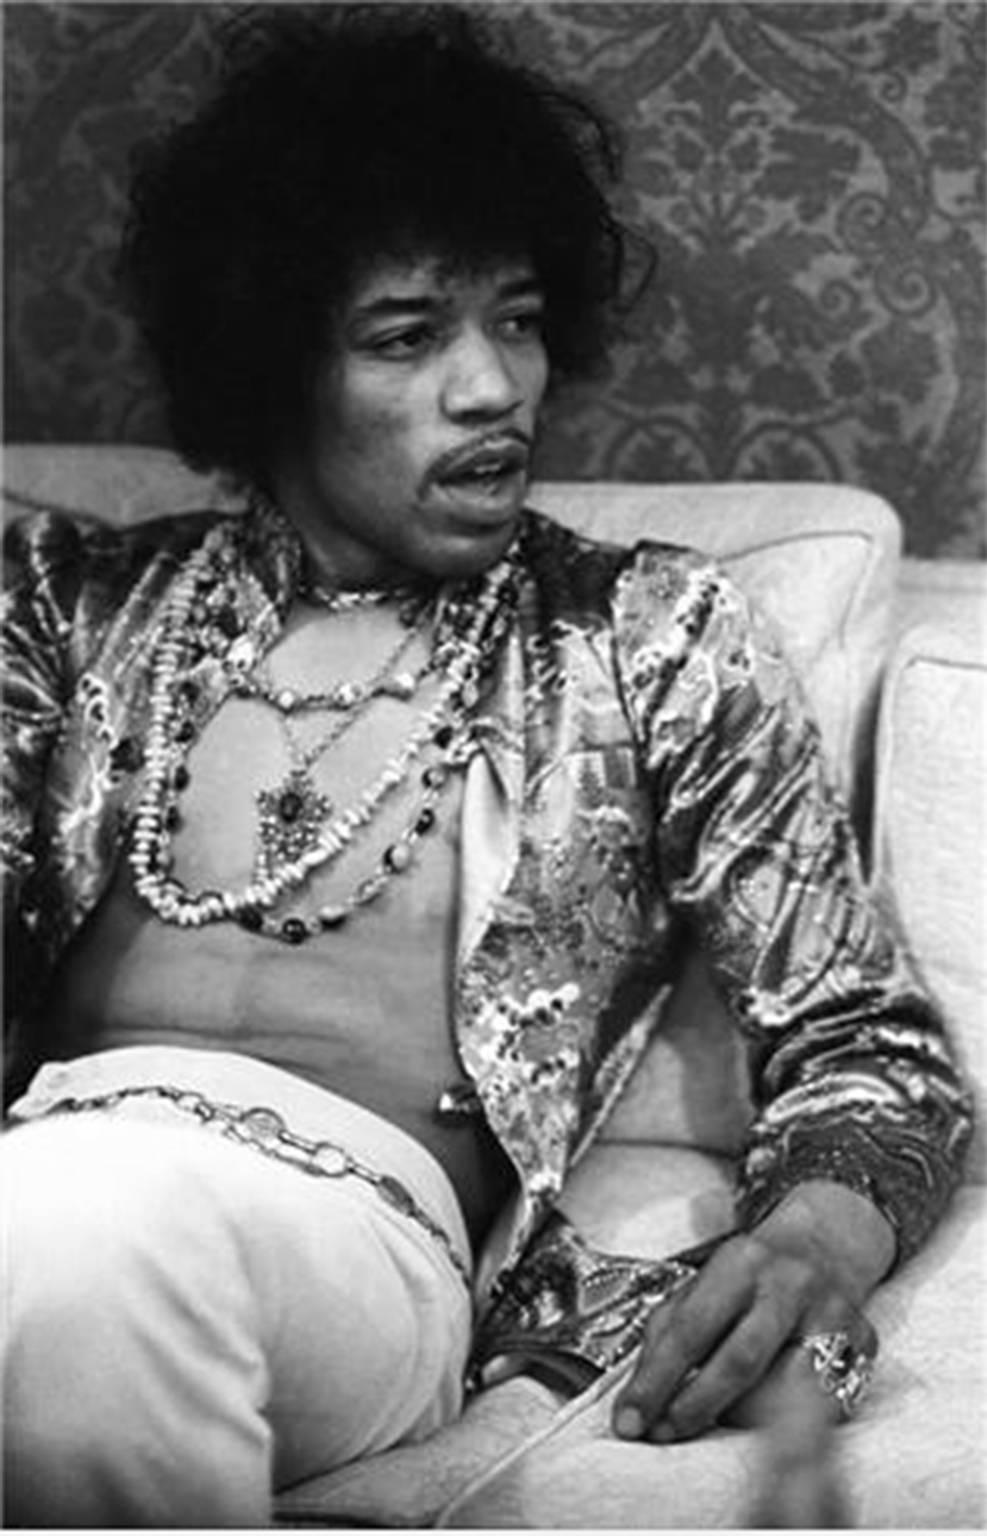 Henry Diltz Portrait Photograph - Jimi Hendrix, Hollywood, CA 1967